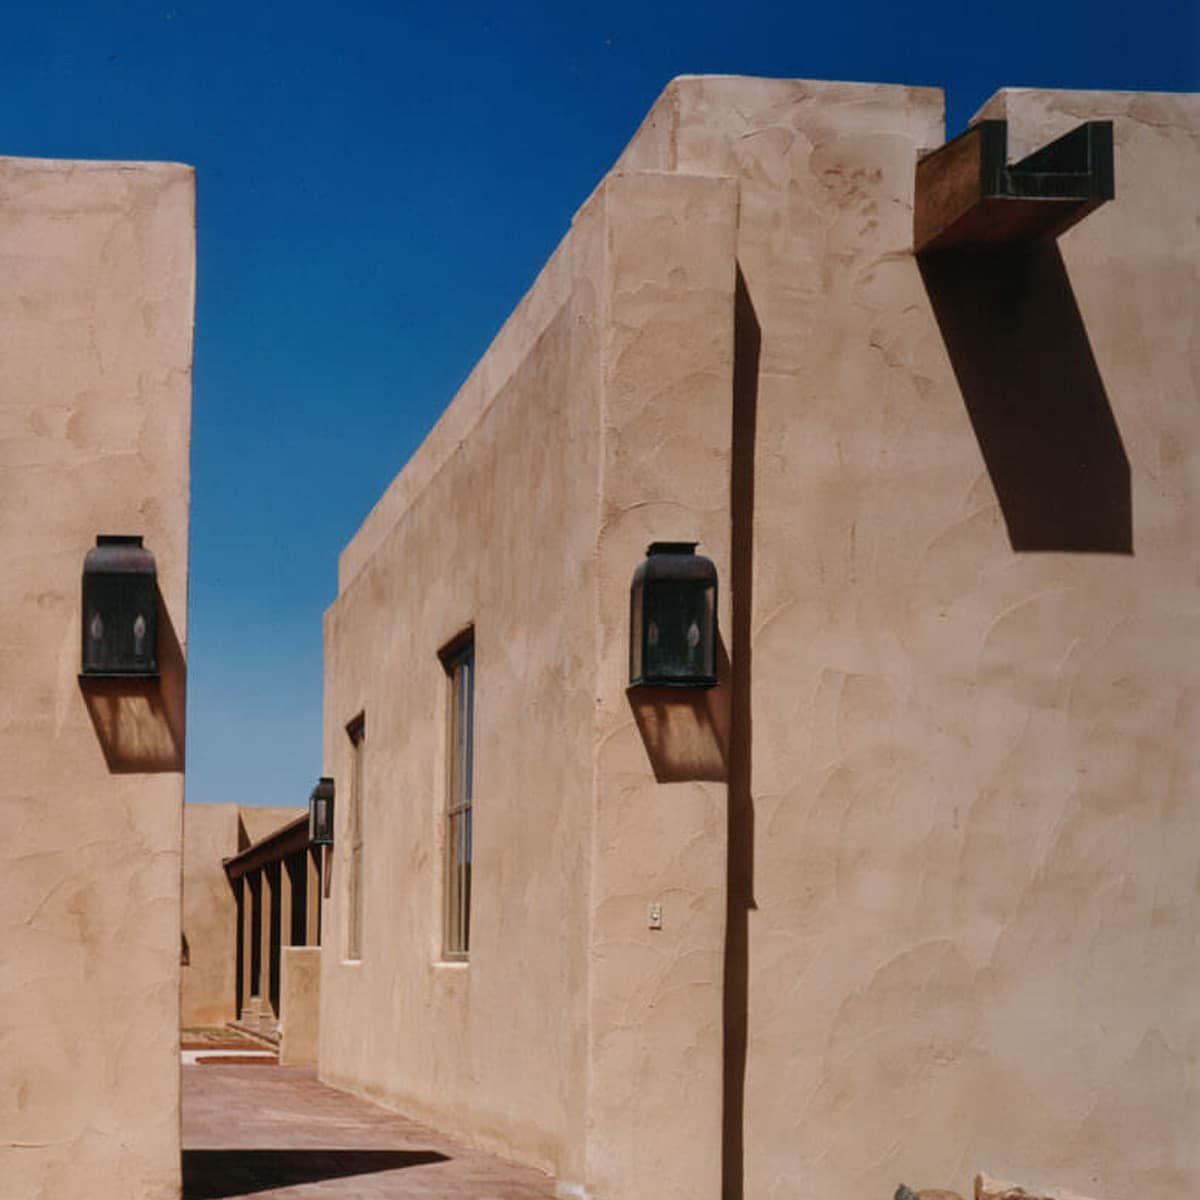 Home in Santa Fe | Rodman Paul Architects